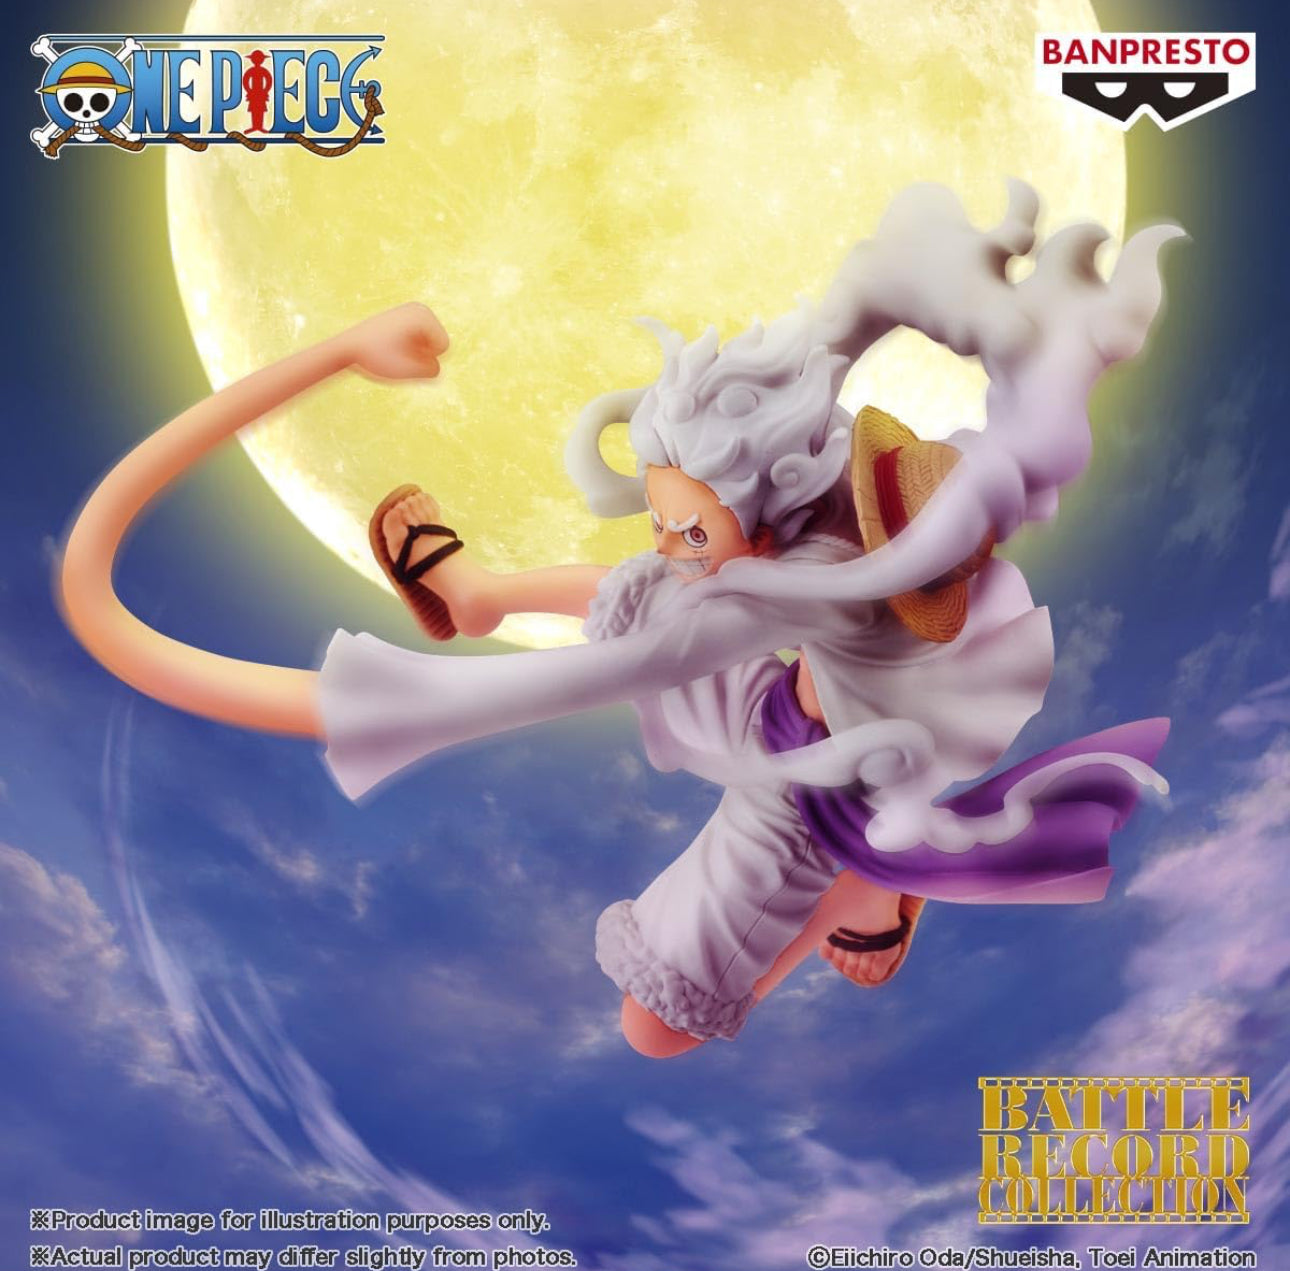 (Preorden Julio) One Piece - Battle Record Collection Monkey D. Luffy Figure (Gear 5 Ver.)